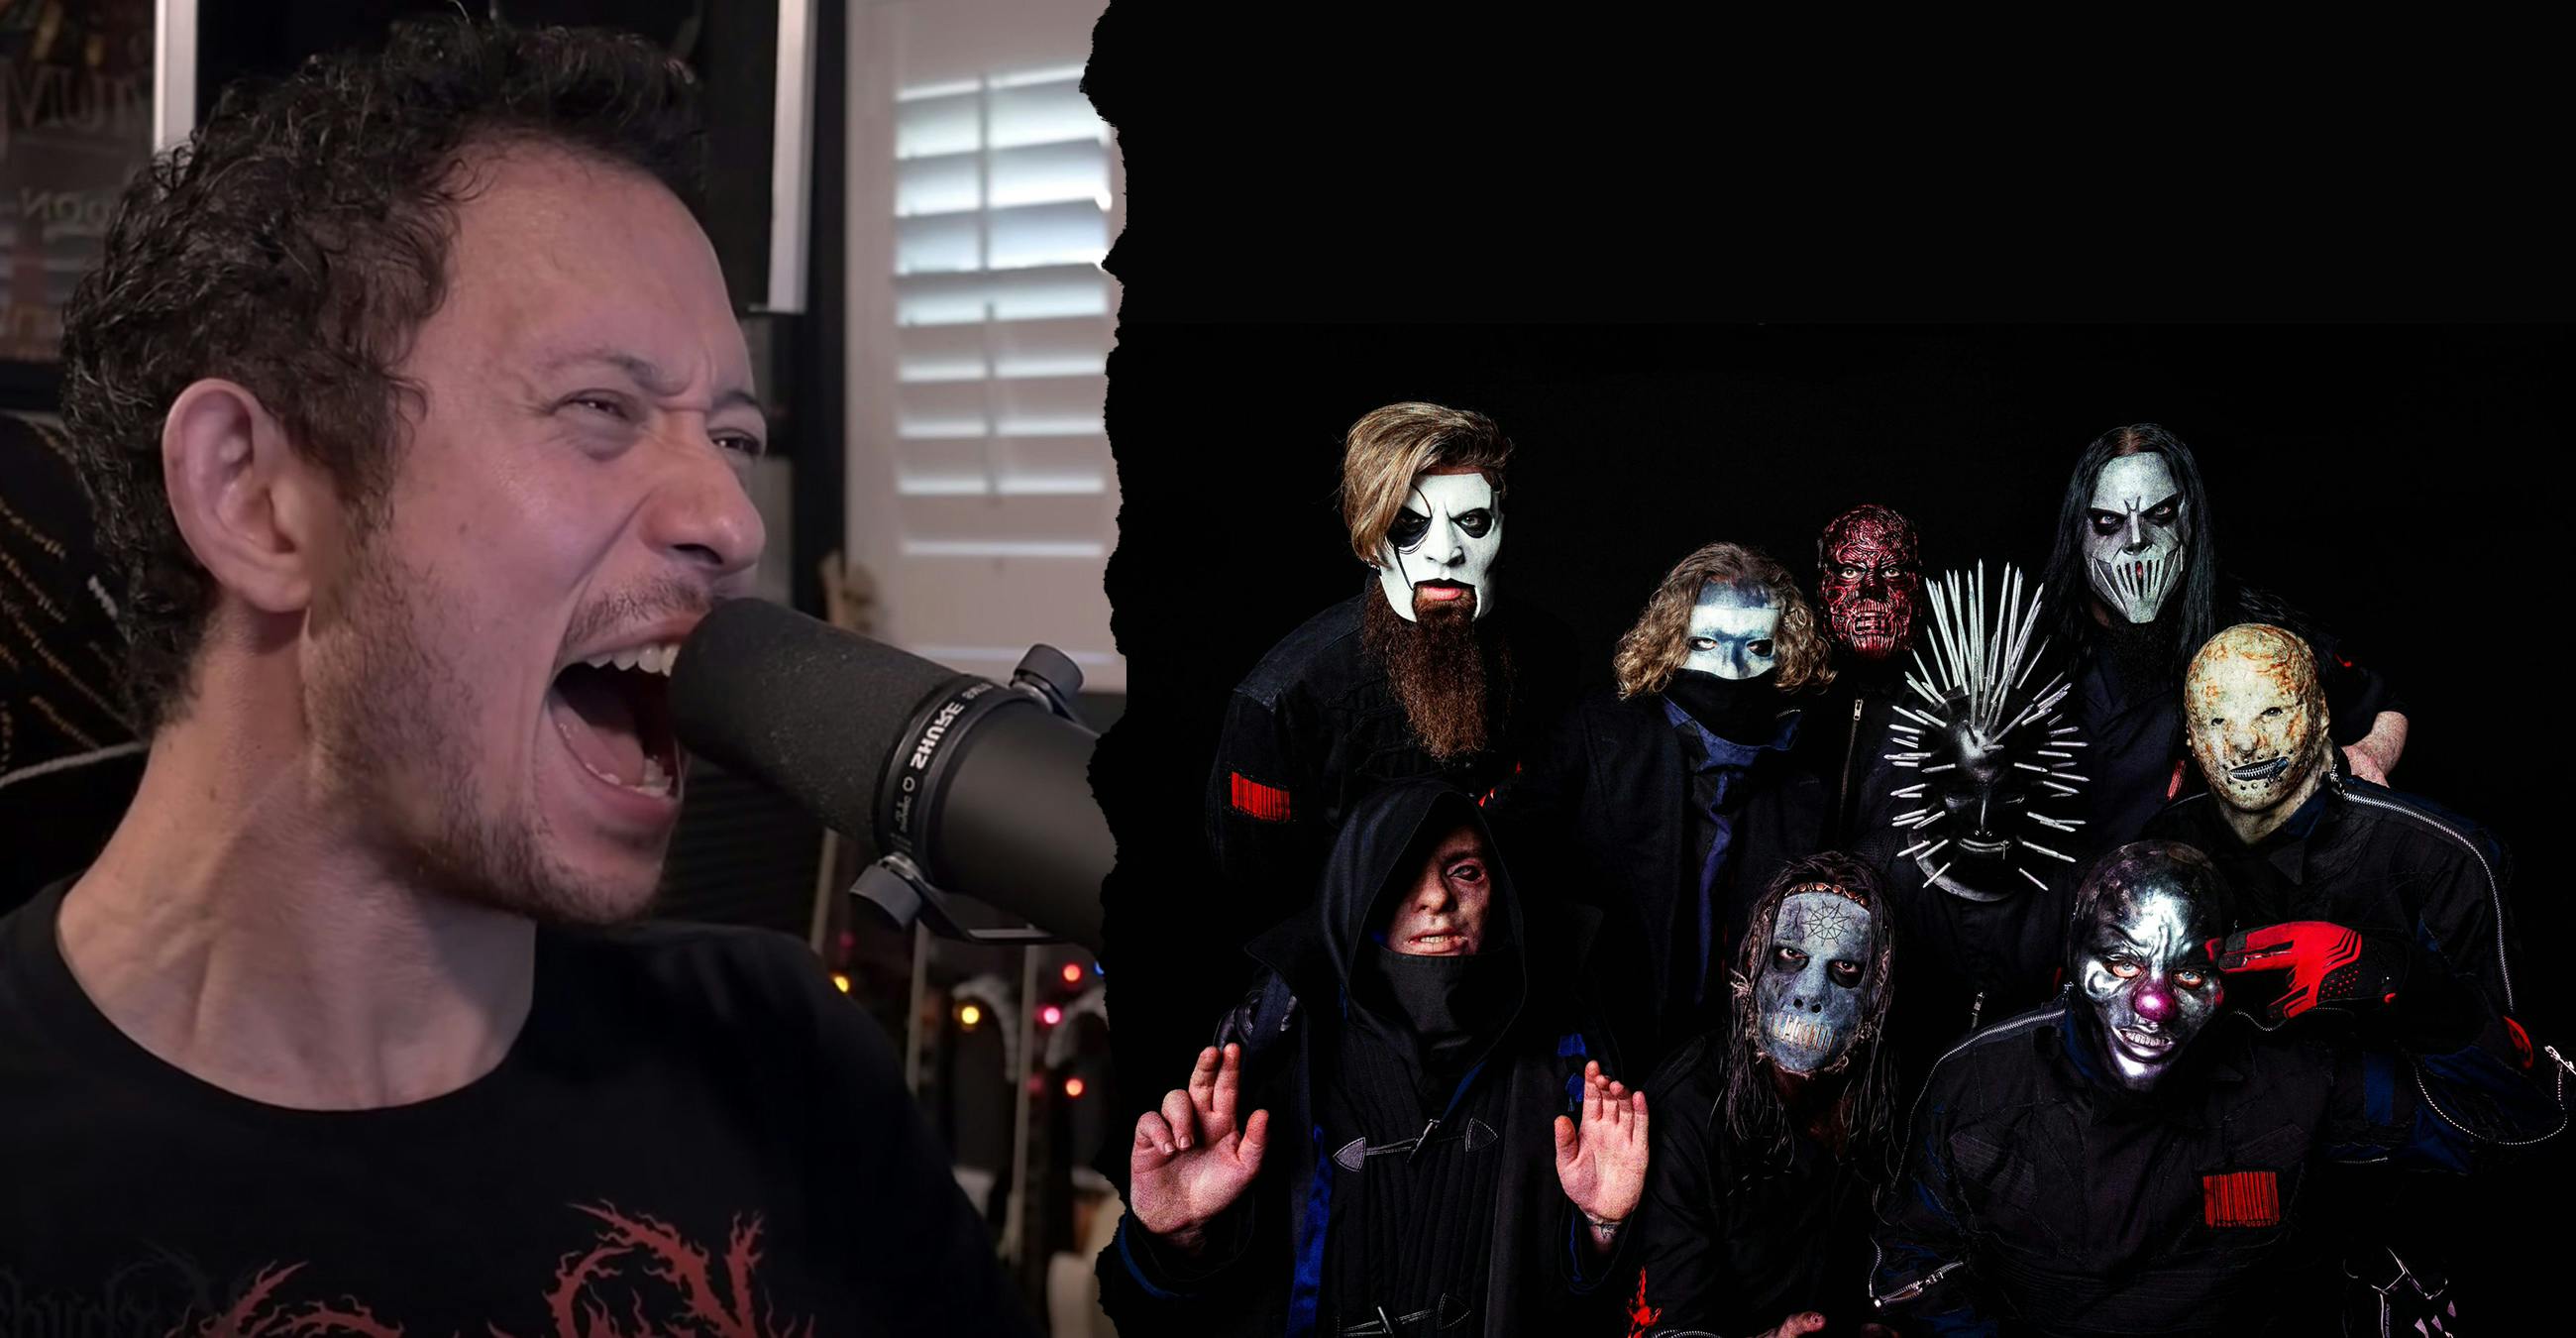 Watch Matt Heafy's Acoustic Cover of Slipknot's Unsainted